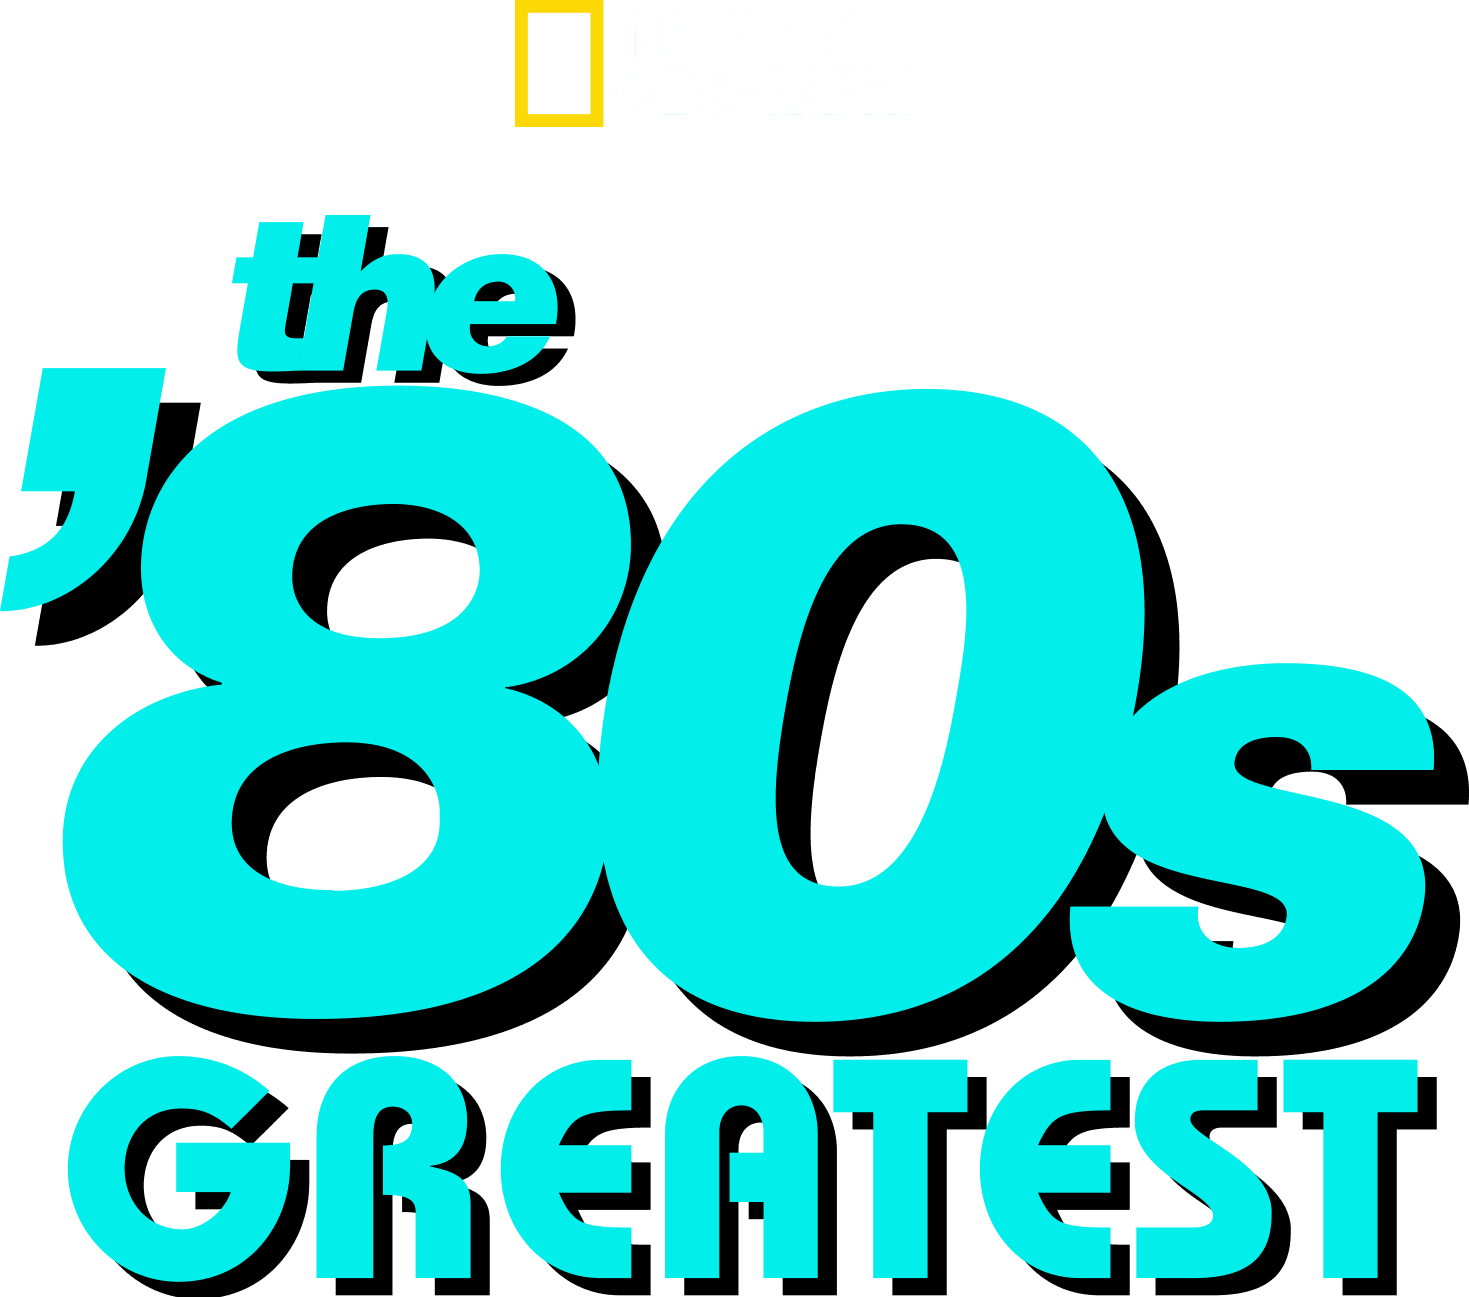 The '80s Greatest logo